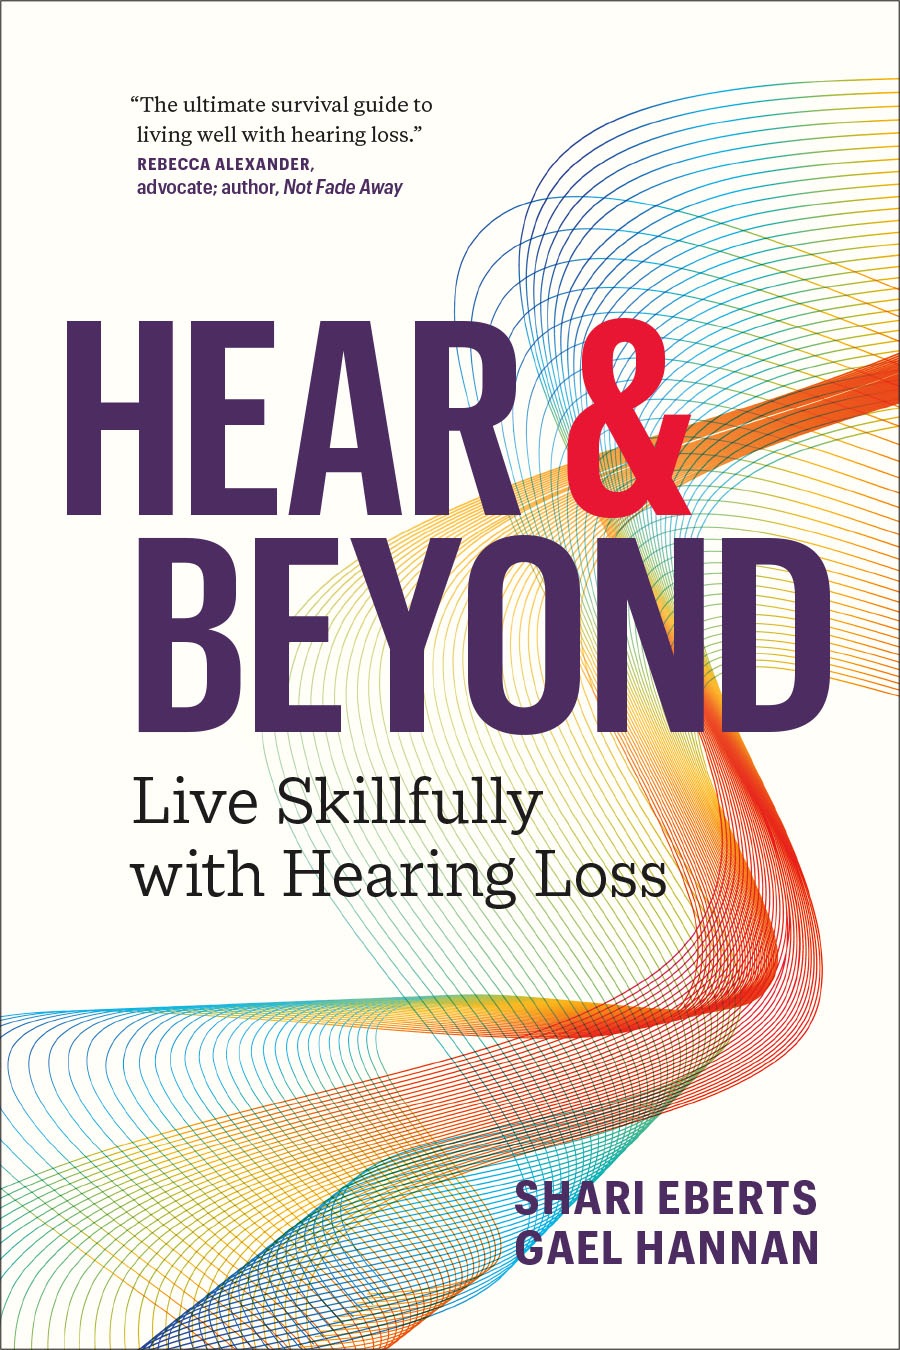 Hear & Beyond by Shari Eberts and Gael Hannan